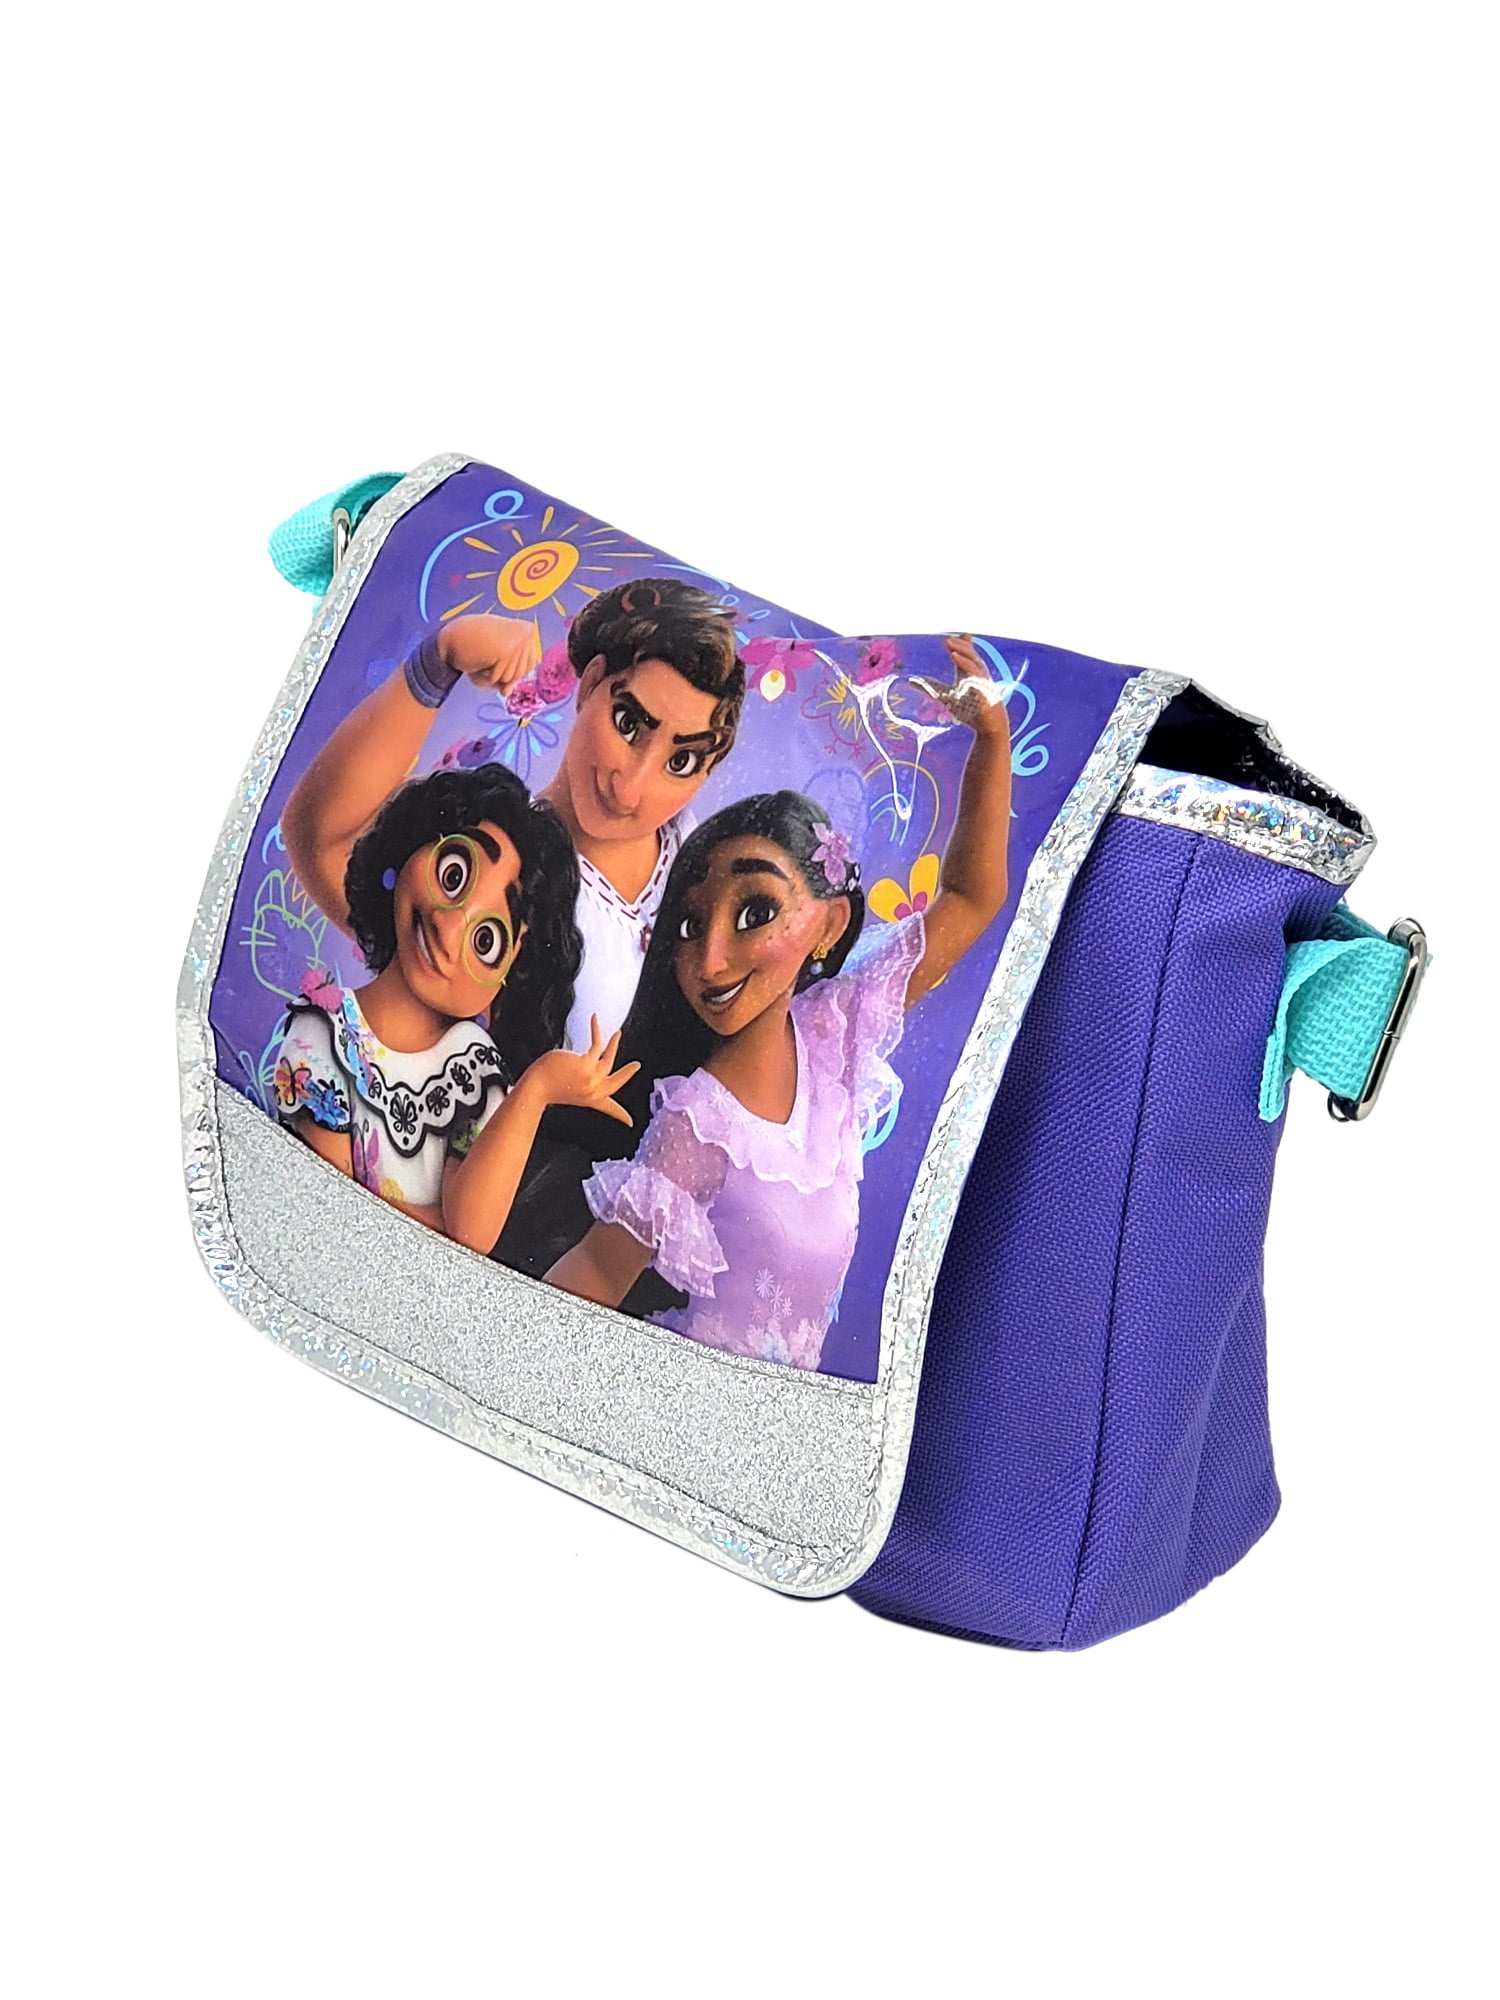 (Purple) - Suerico Cute Girls Purse Handbag Mini Cartoon Casual Messenger  Shoulder Crossbody Bags (Purple)